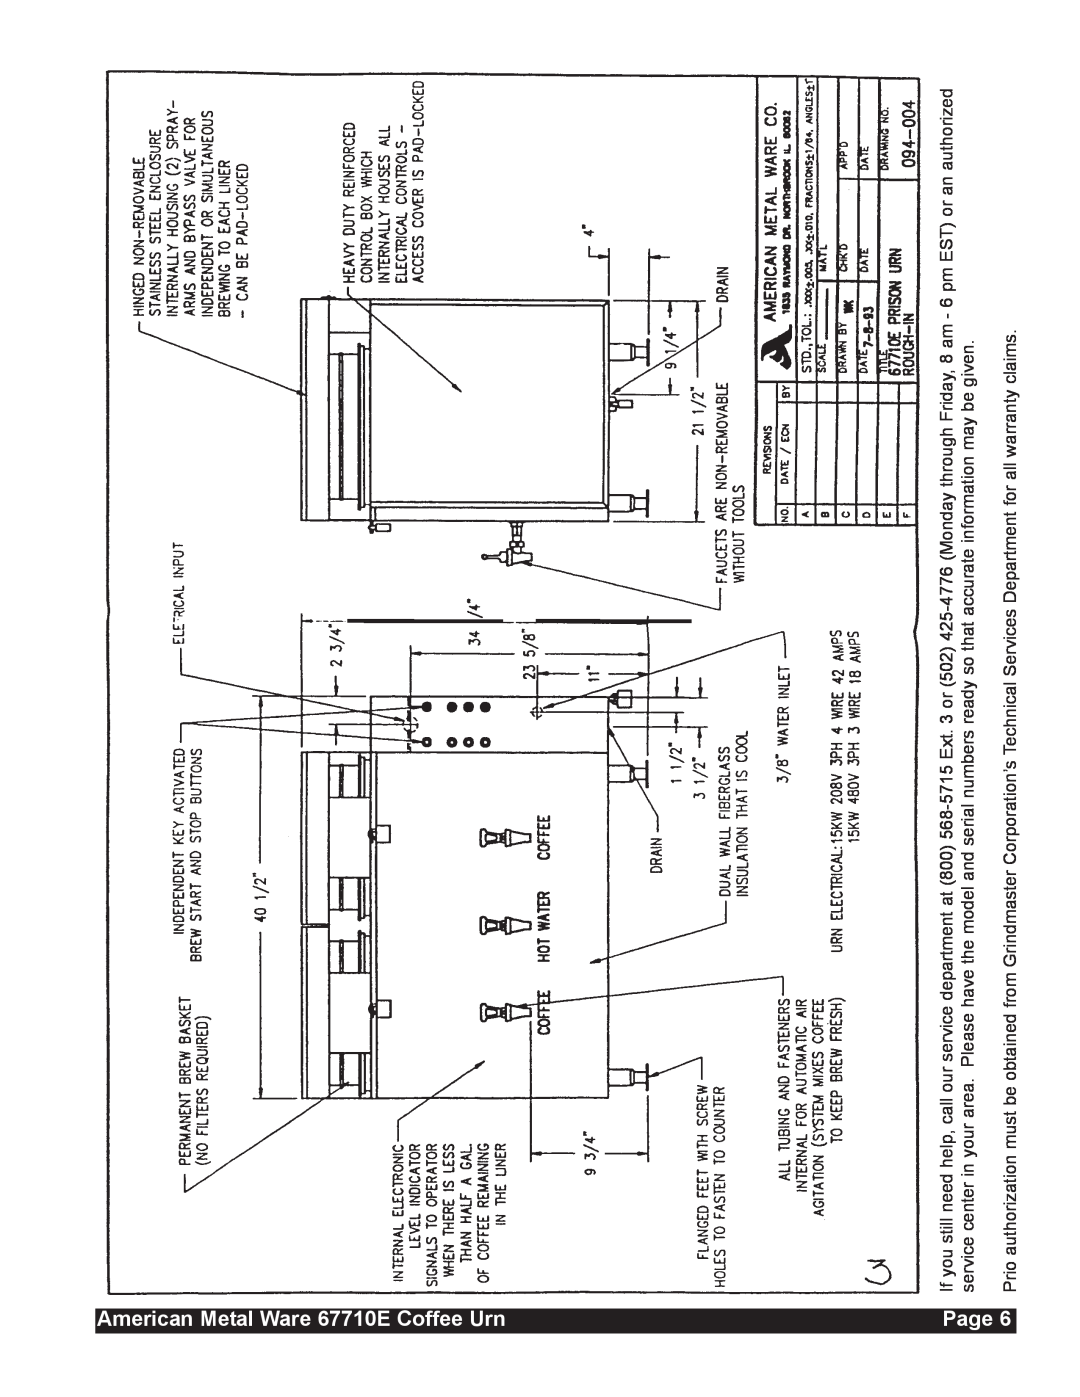 Grindmaster service manual Page, American Metal Ware 67710E Coffee Urn 